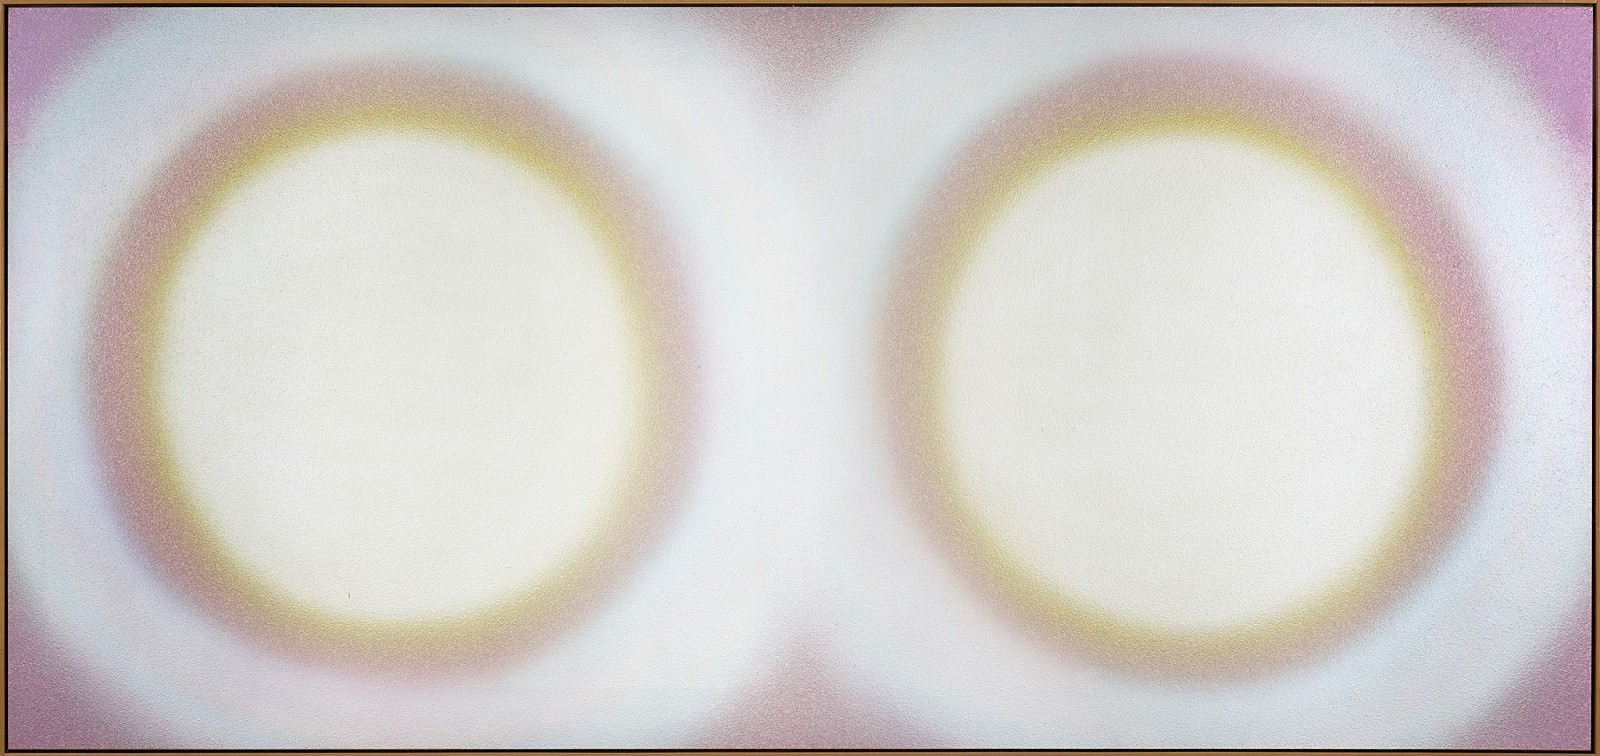 Dan Christensen, Juneau, 1991
Acrylic on canvas, 56 x 120 in. (142.2 x 304.8 cm)
CHR-00189